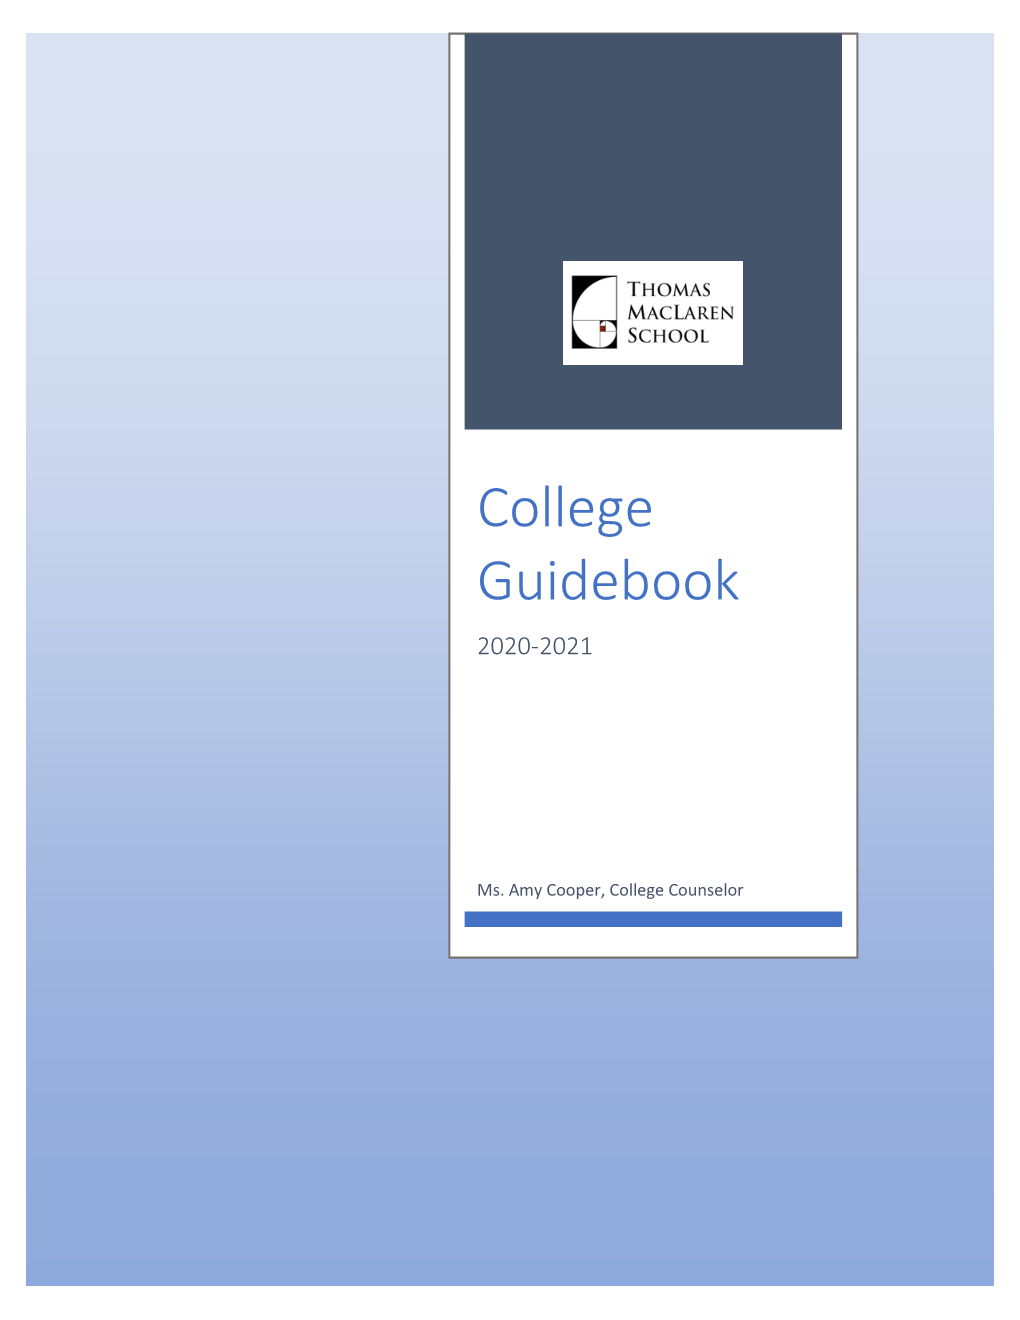 College Guidebook